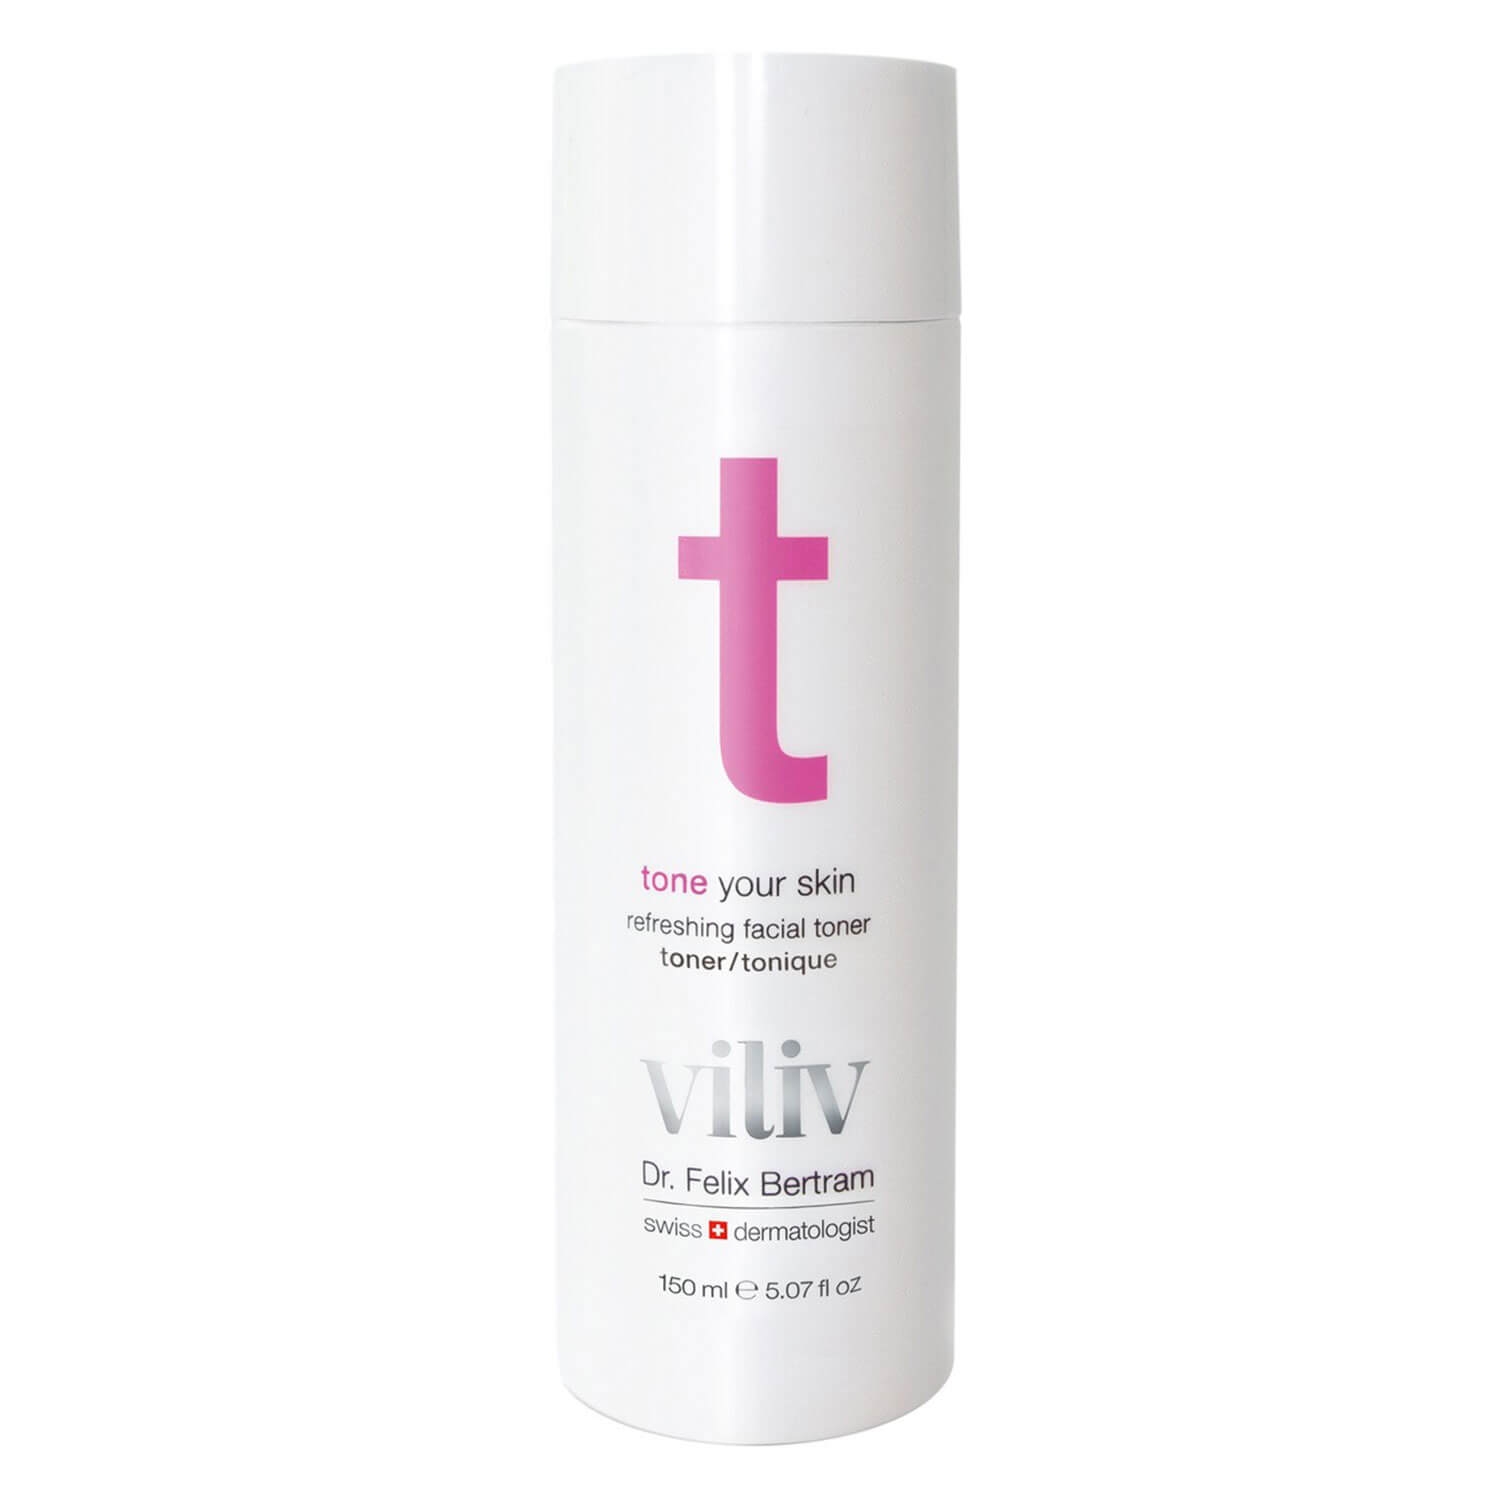 Produktbild von viliv - tone your skin refreshing facial toner